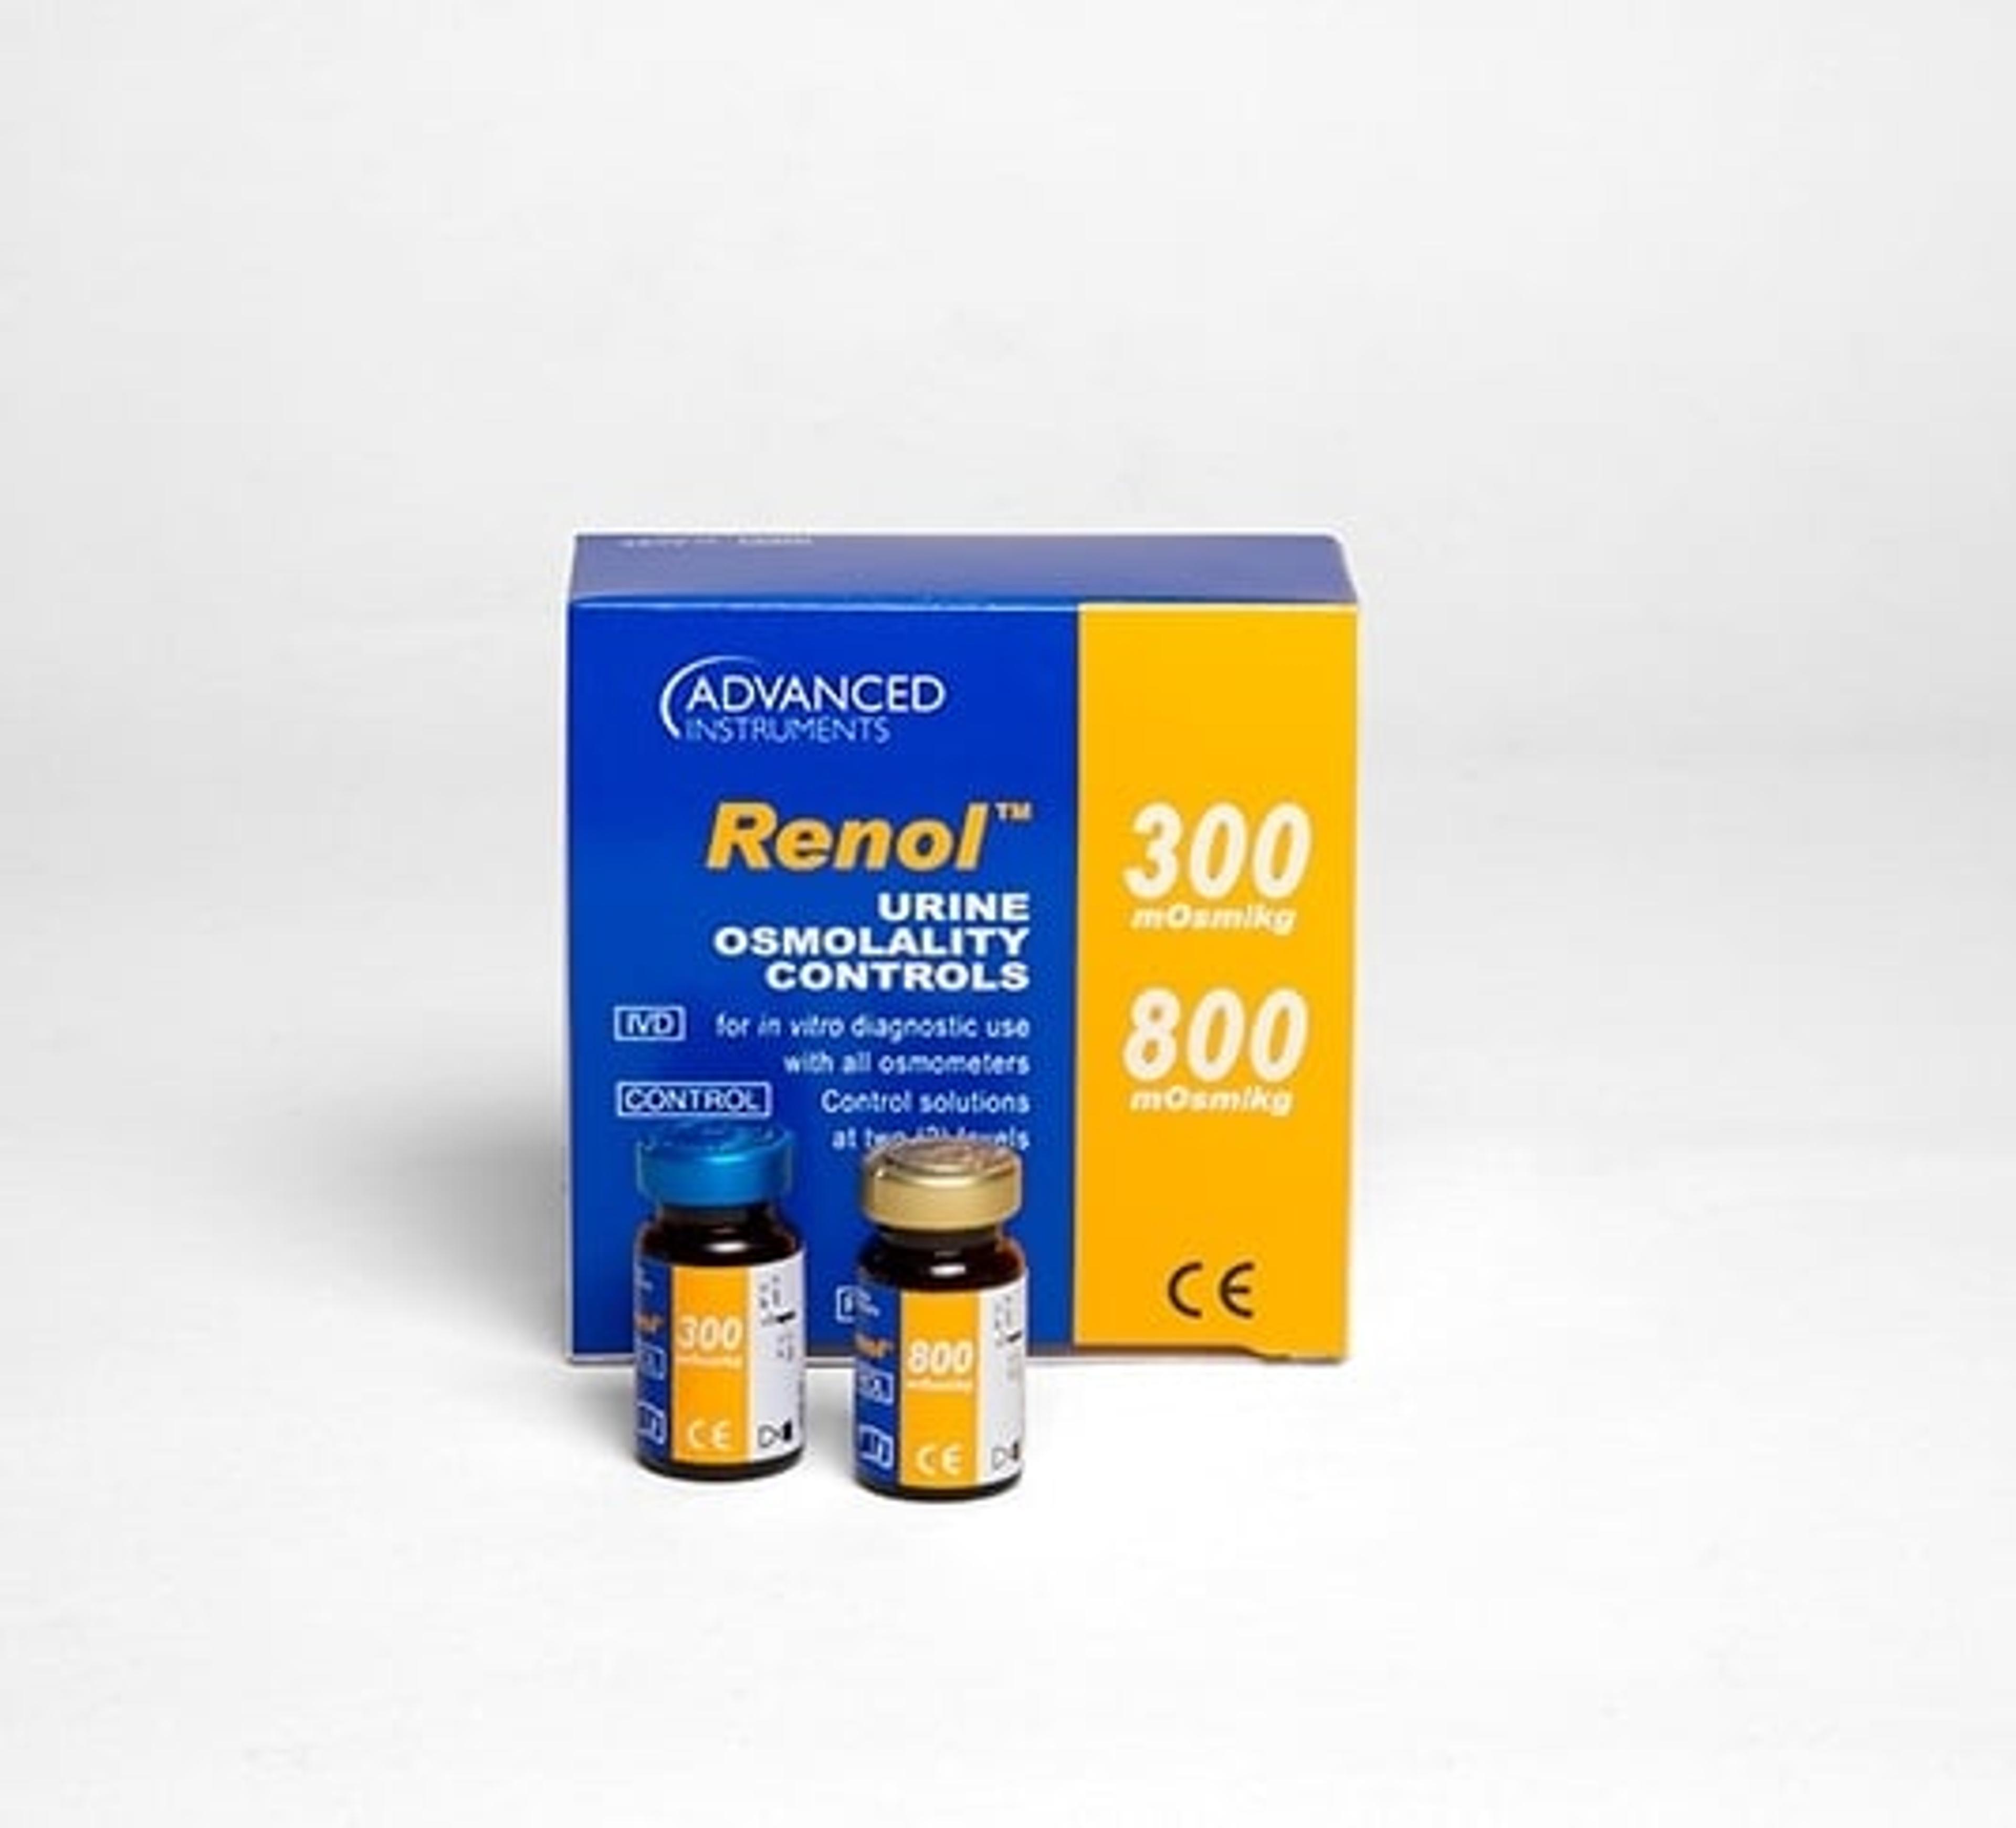 Renol Urine Osmolality Controls